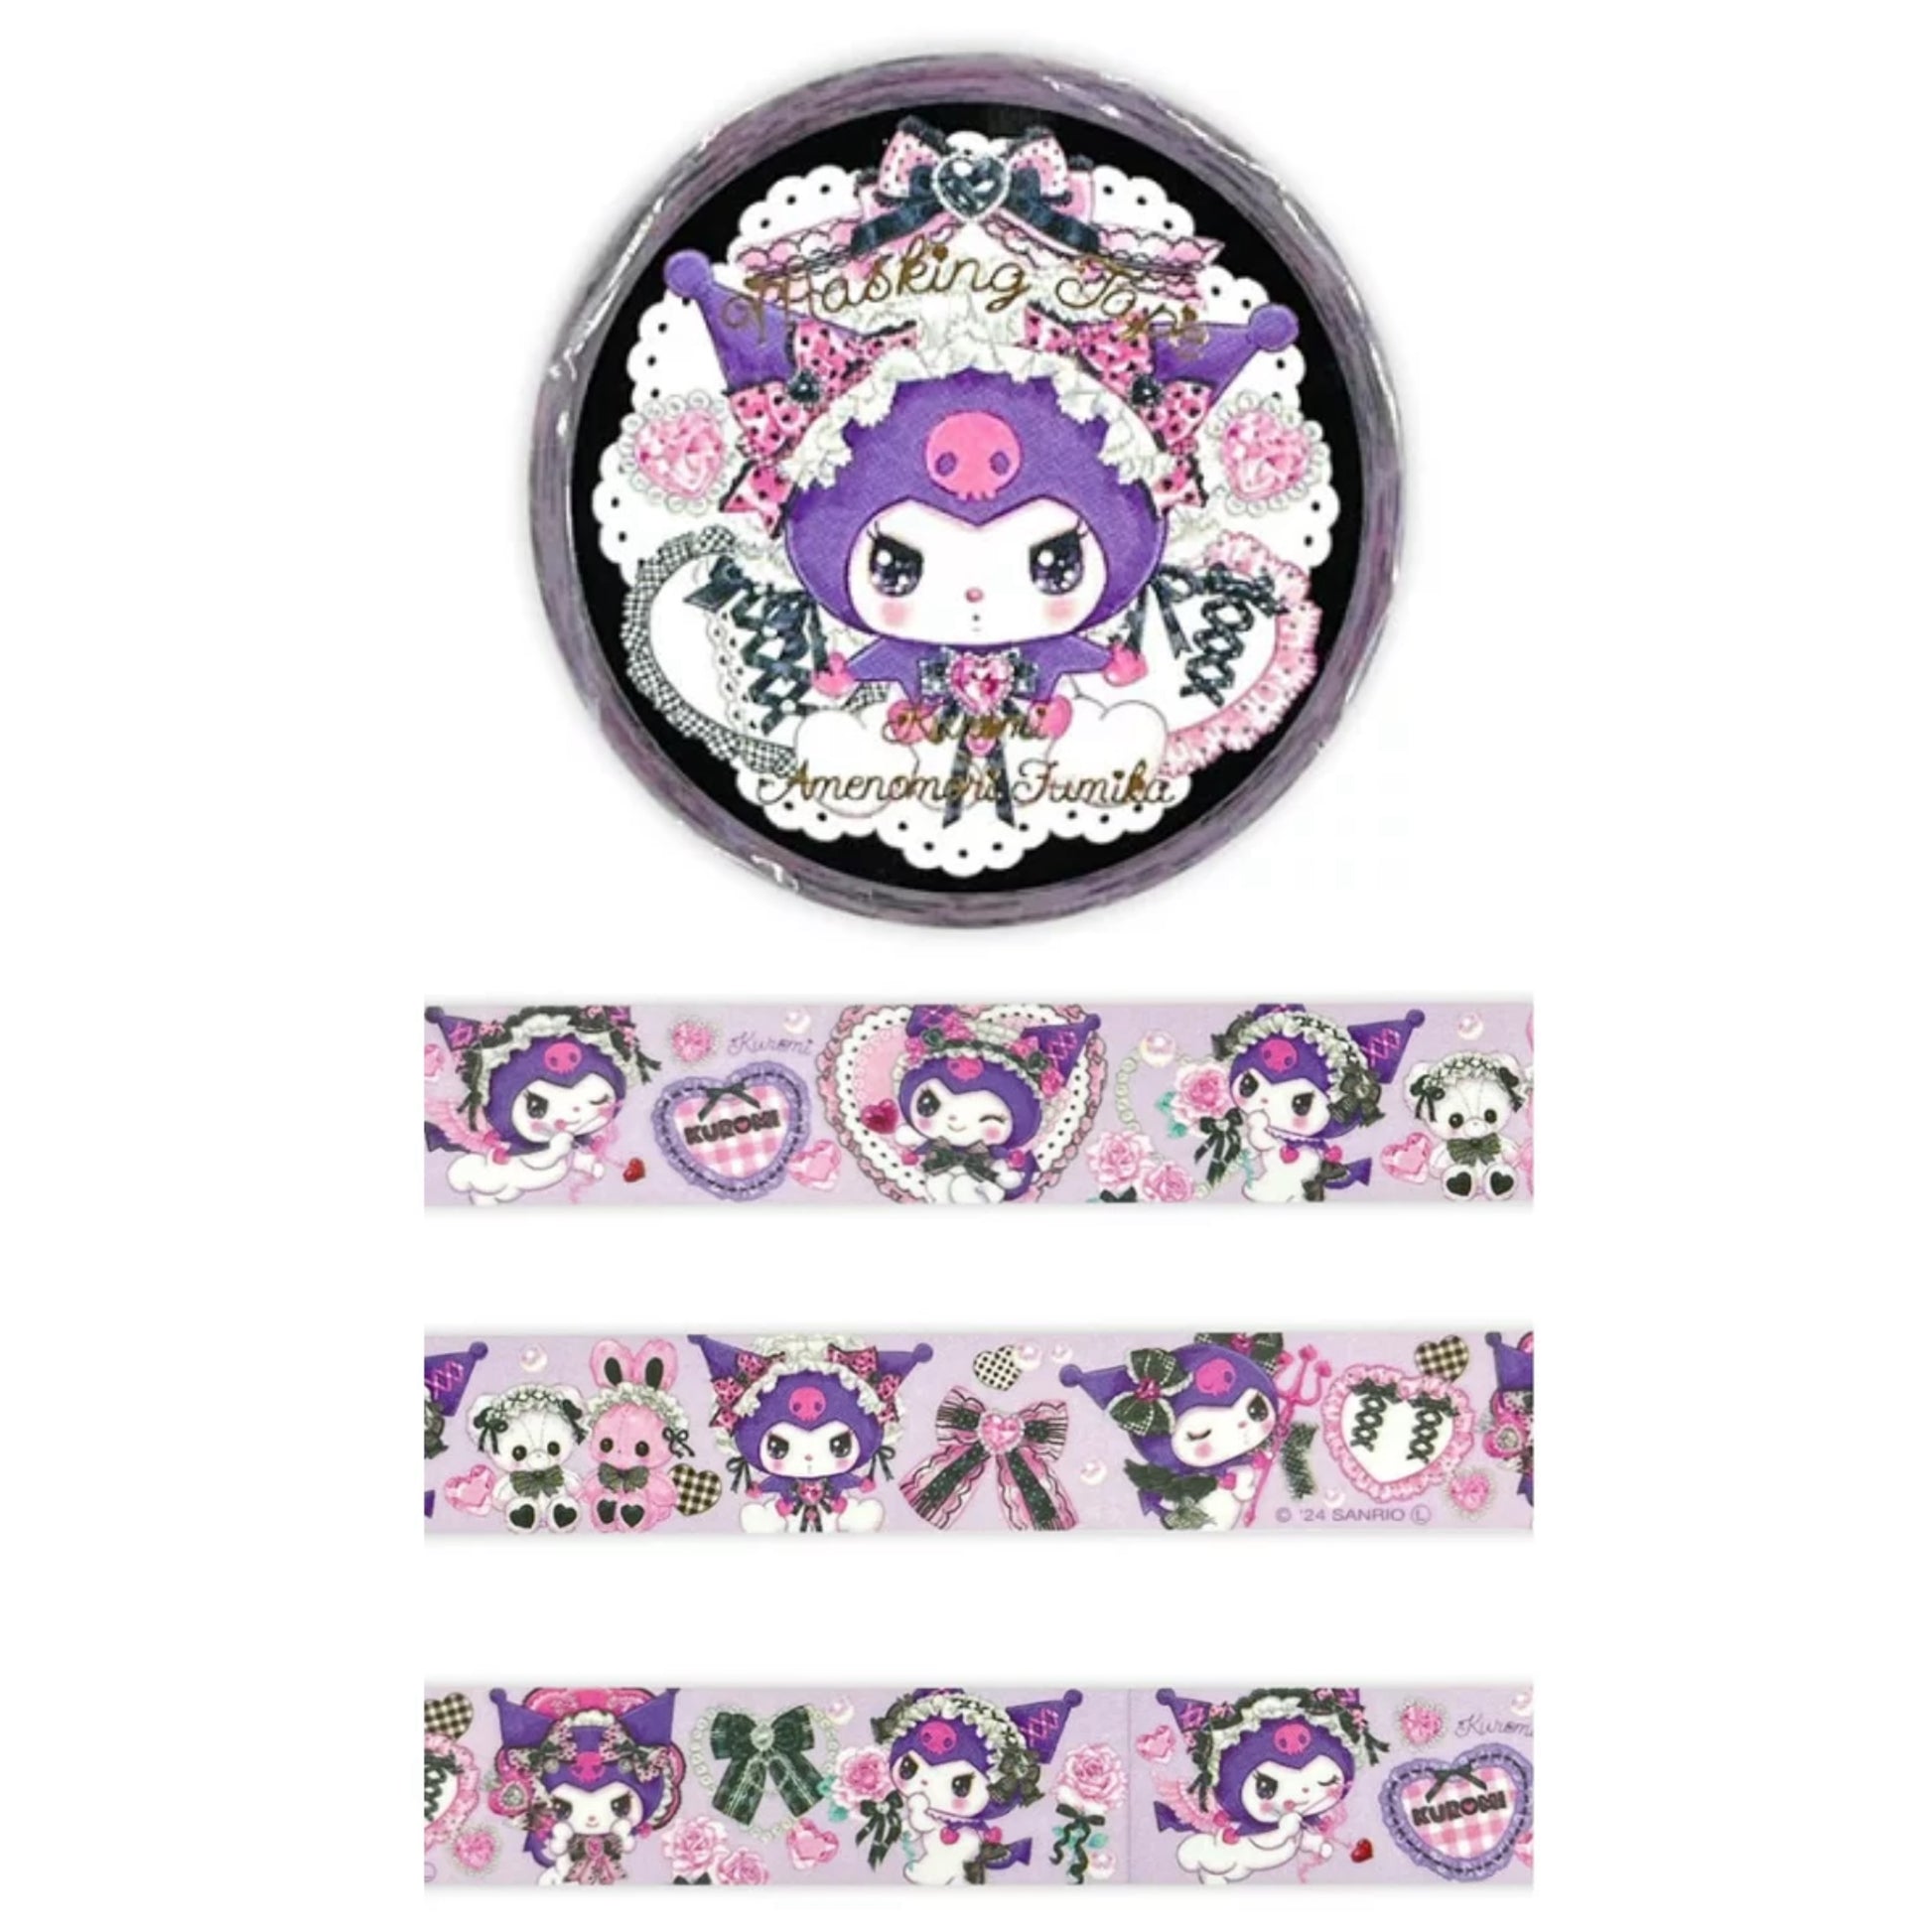 Sanrio x Amenomori Fumika - 紙膠帶 Masking Tape